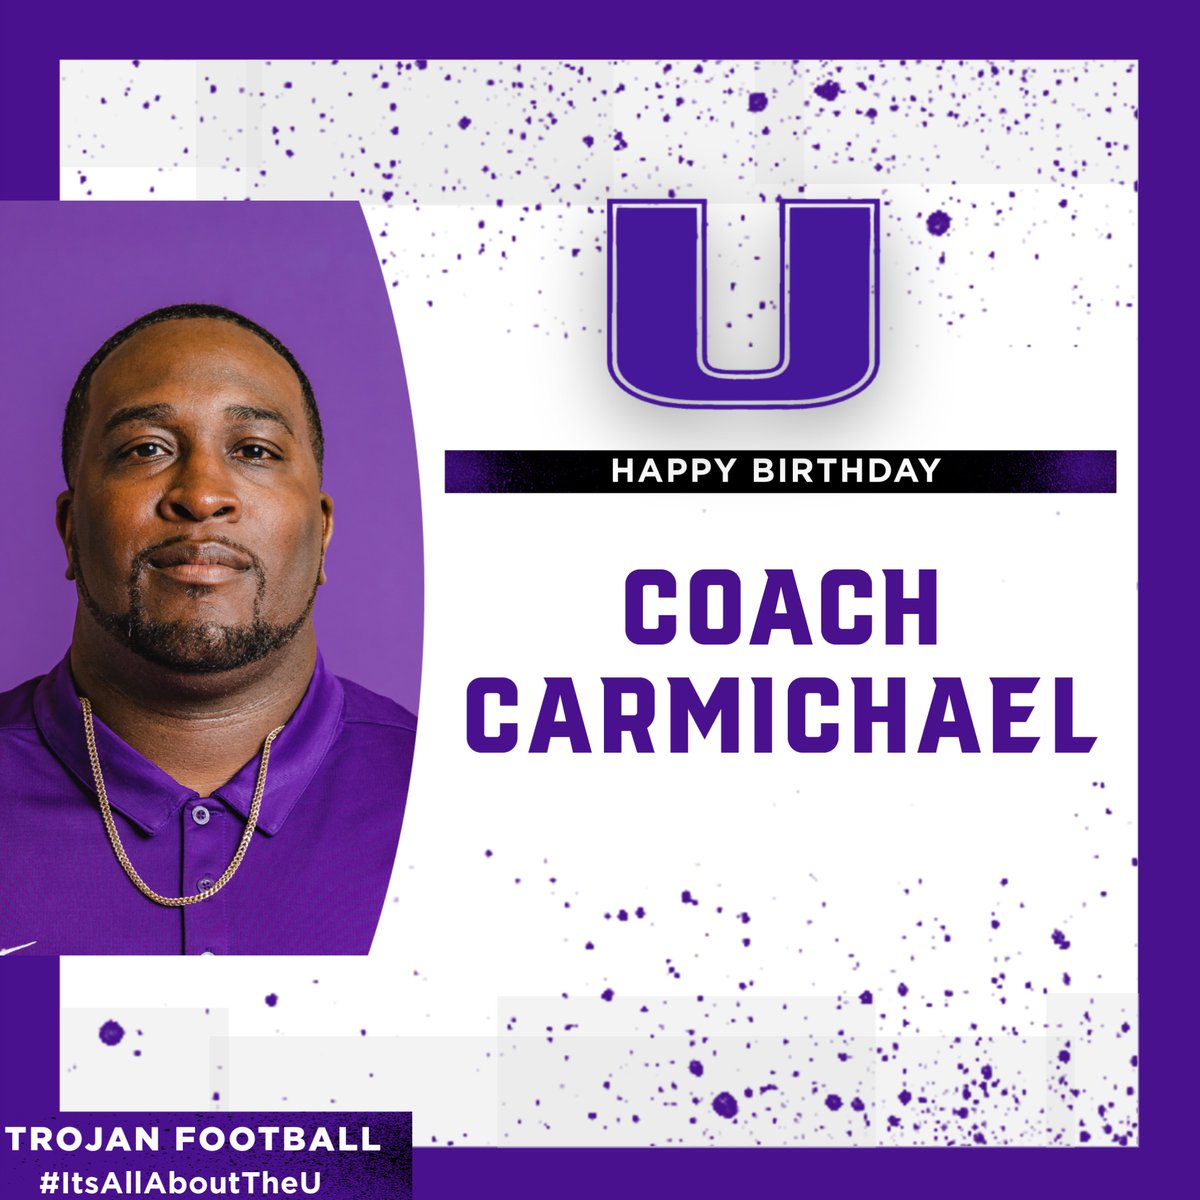 Happy Belated Birthday to Coach Carmichael!